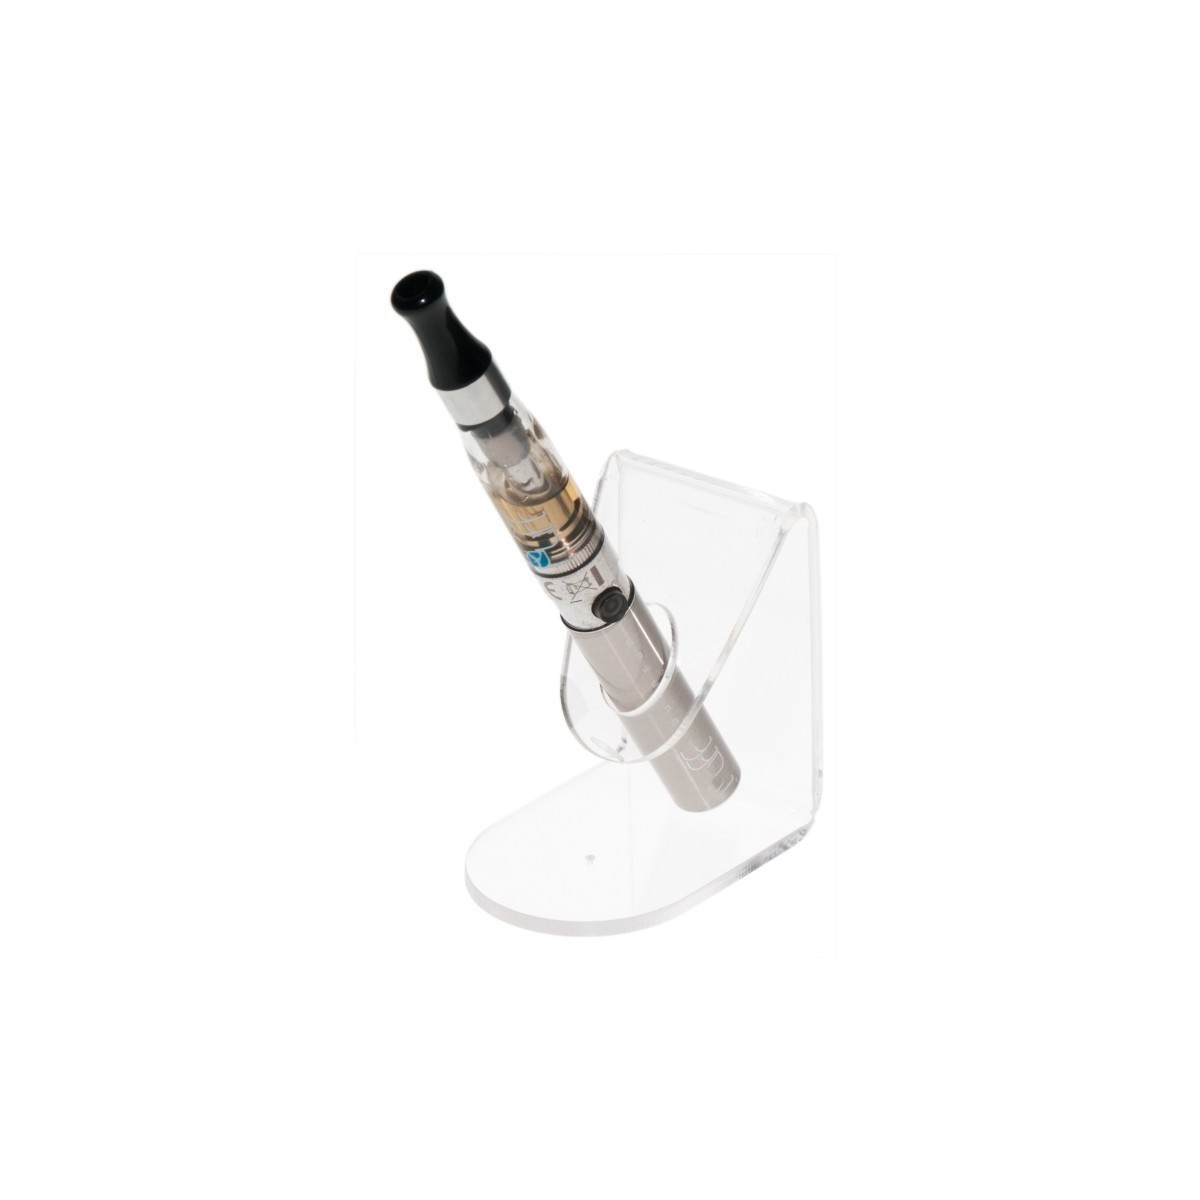 Expositor de mostrador para cigarrillo electrónico en plexiglás transparente